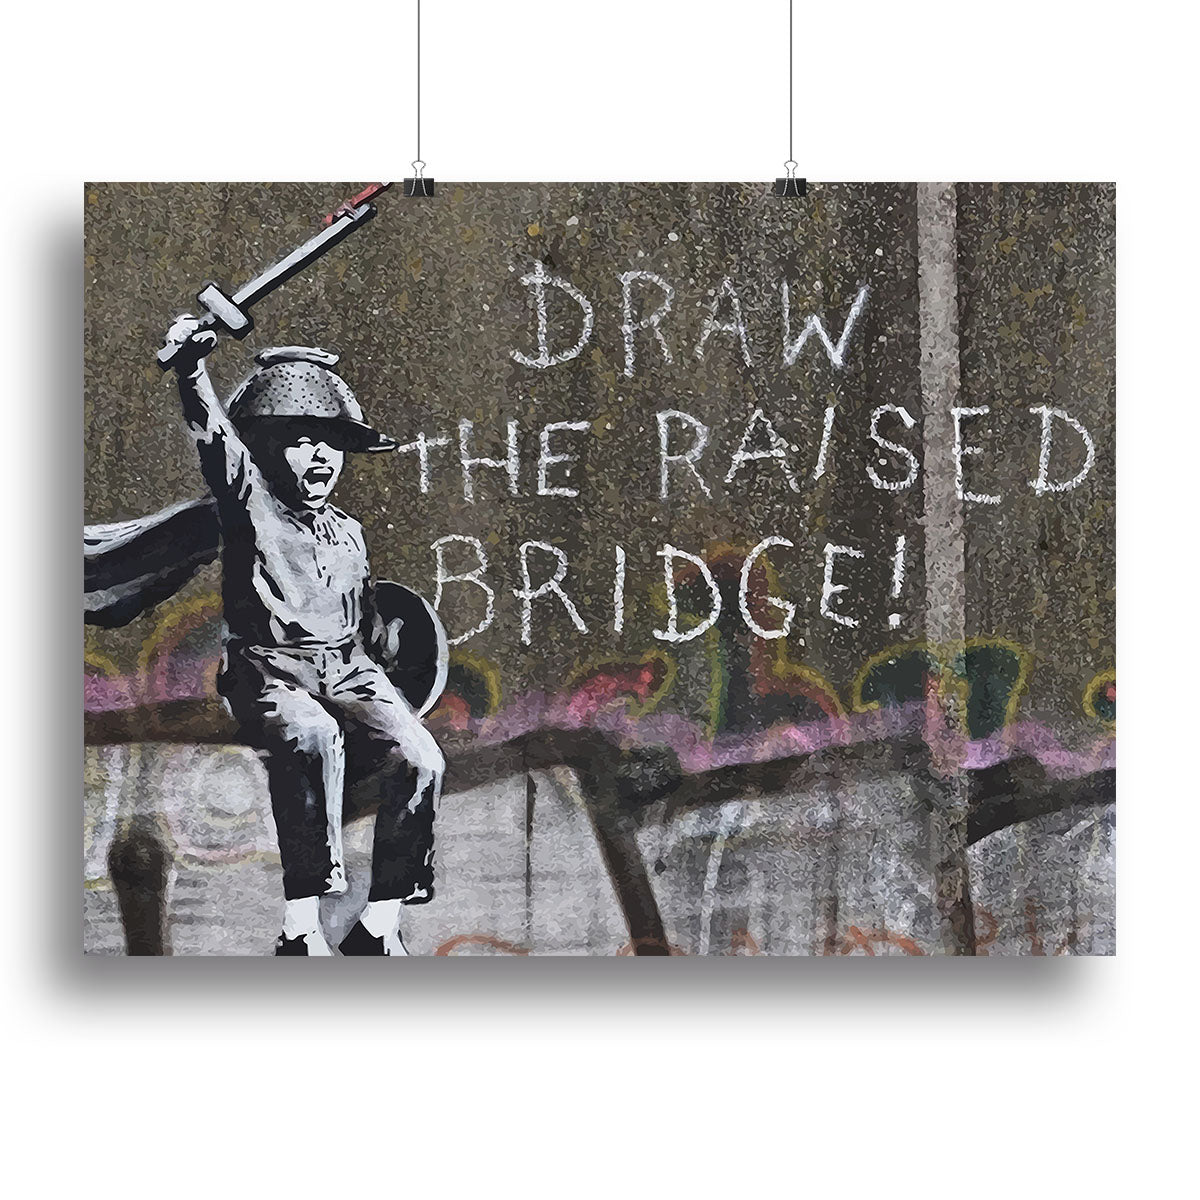 Banksy Draw The Raised Bridge Canvas Print or Poster - Canvas Art Rocks - 2